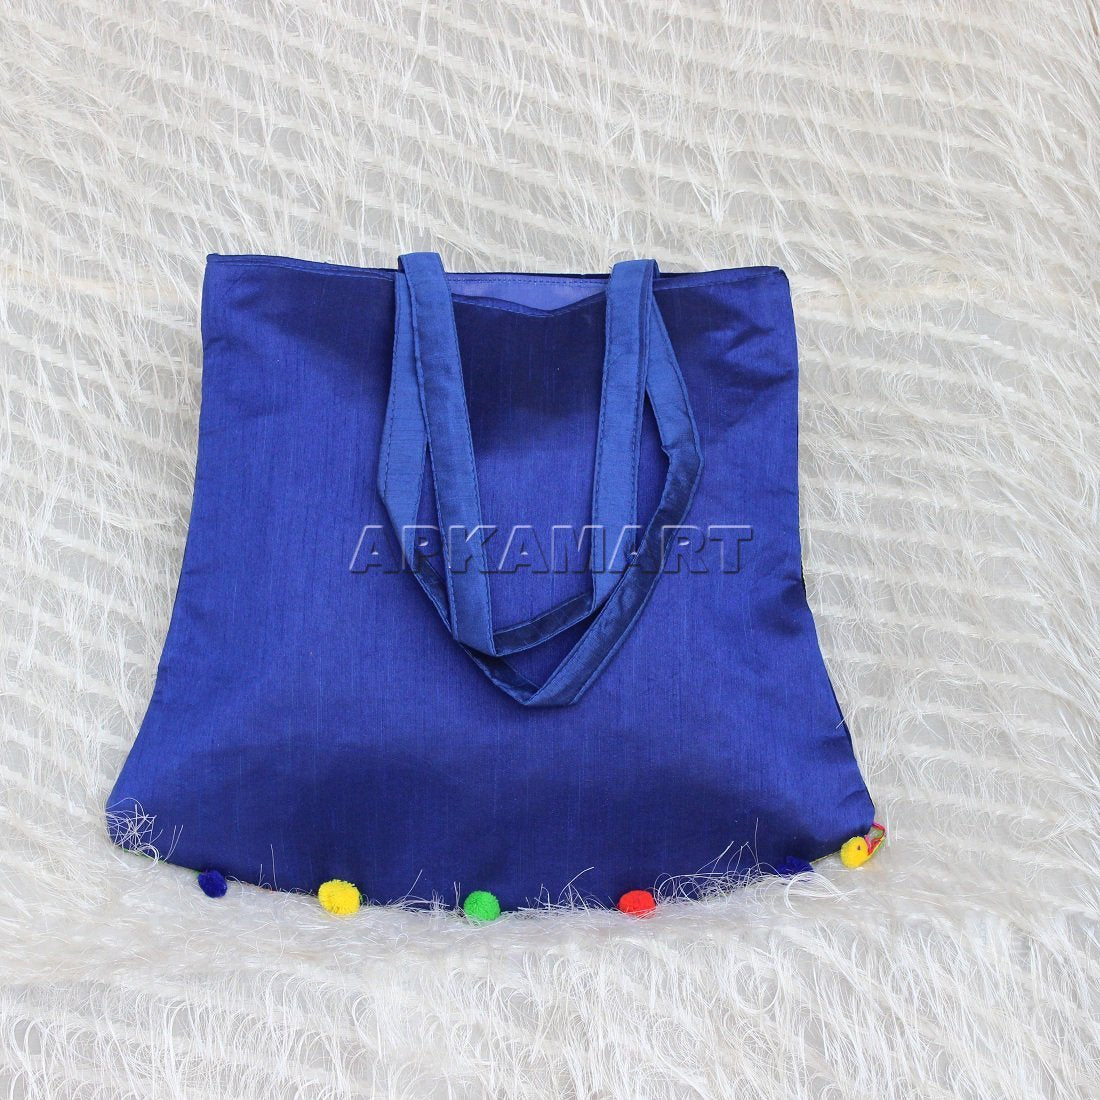 Handbags for Women | Side Bags for Women - ApkaMart